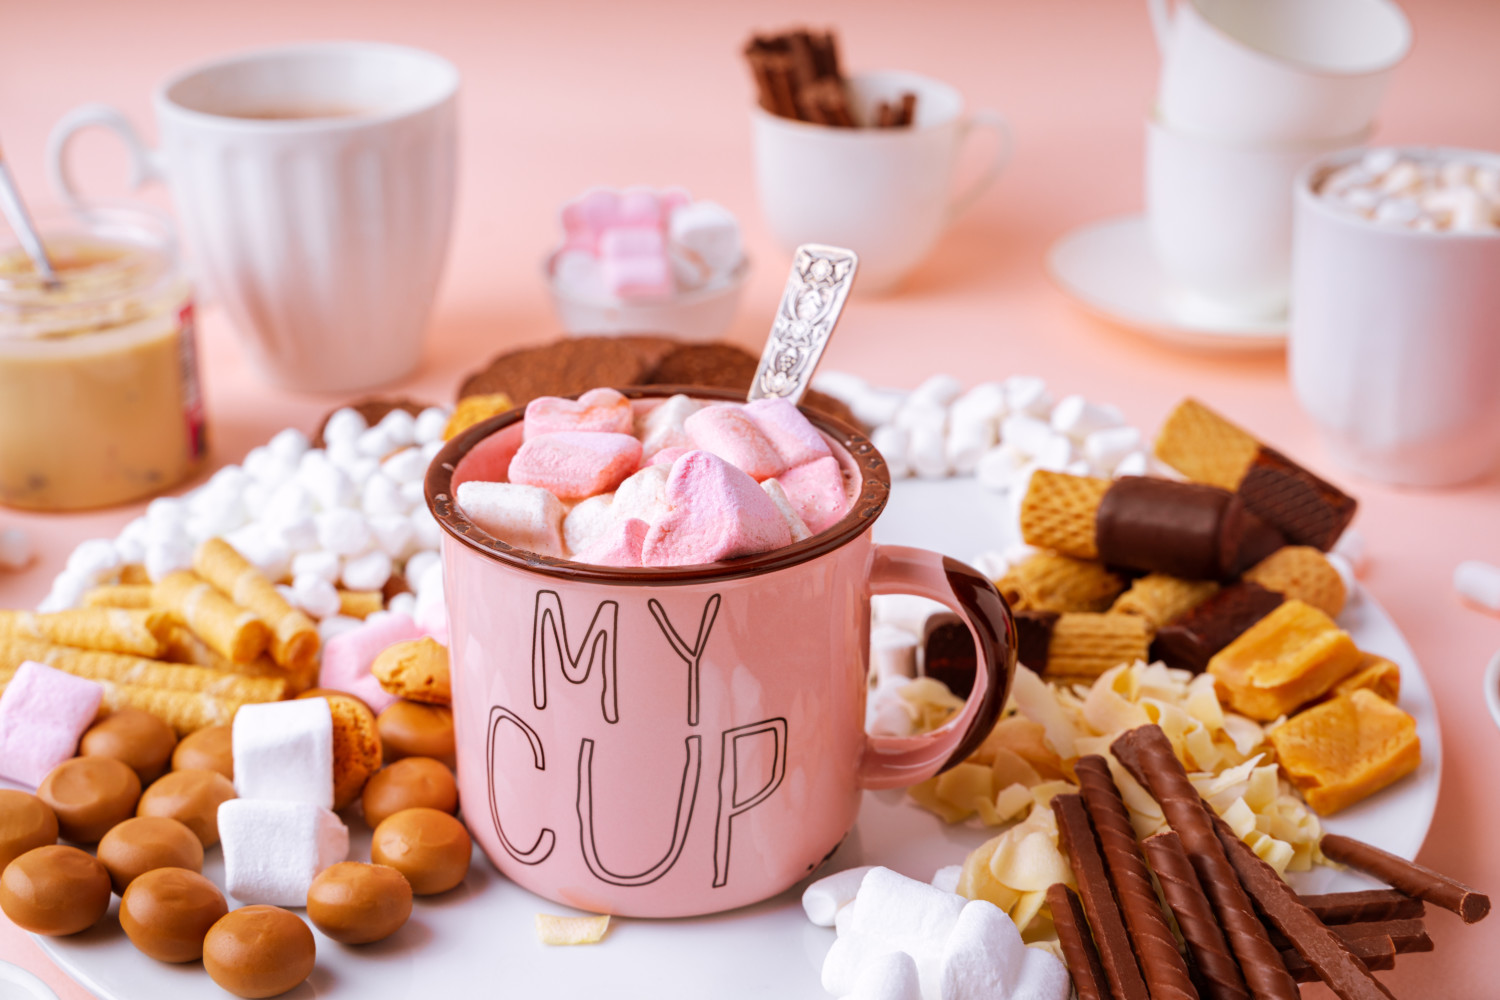 Hot chocolate in pink mug on charcuterie board